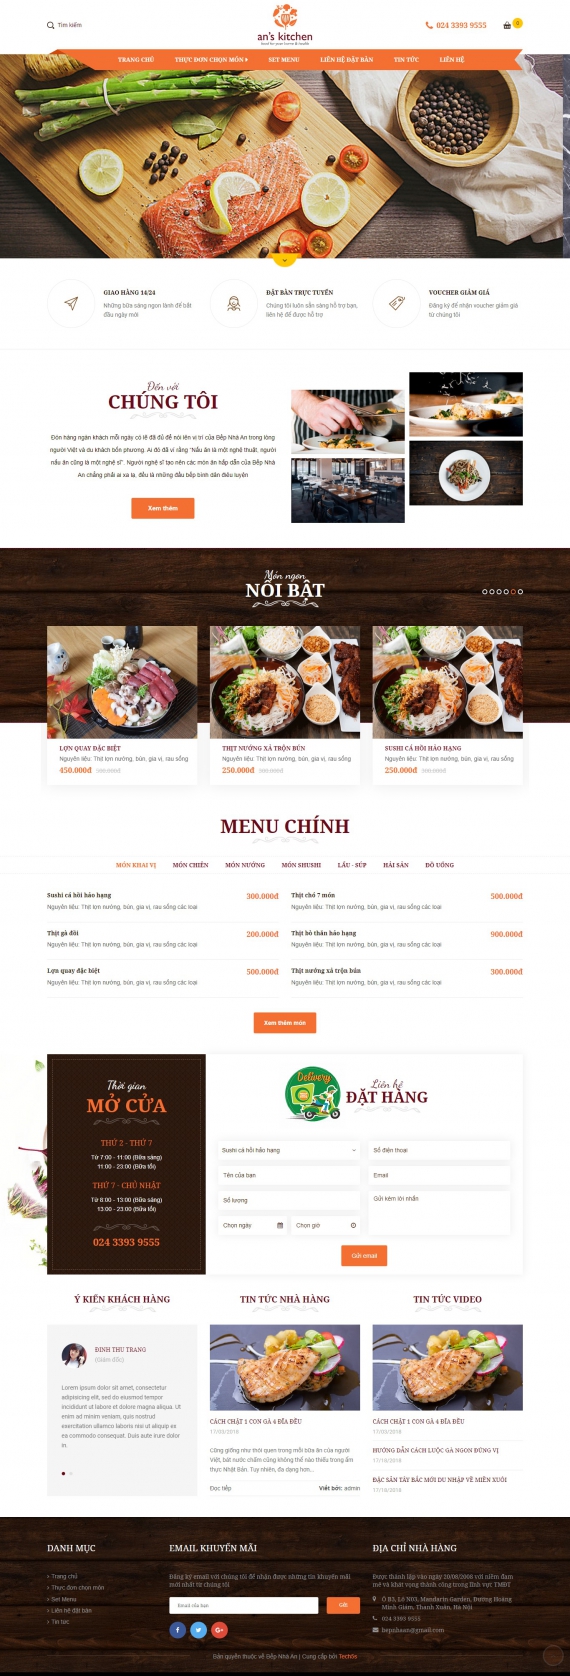 Mẫu website nhà hàng - 259